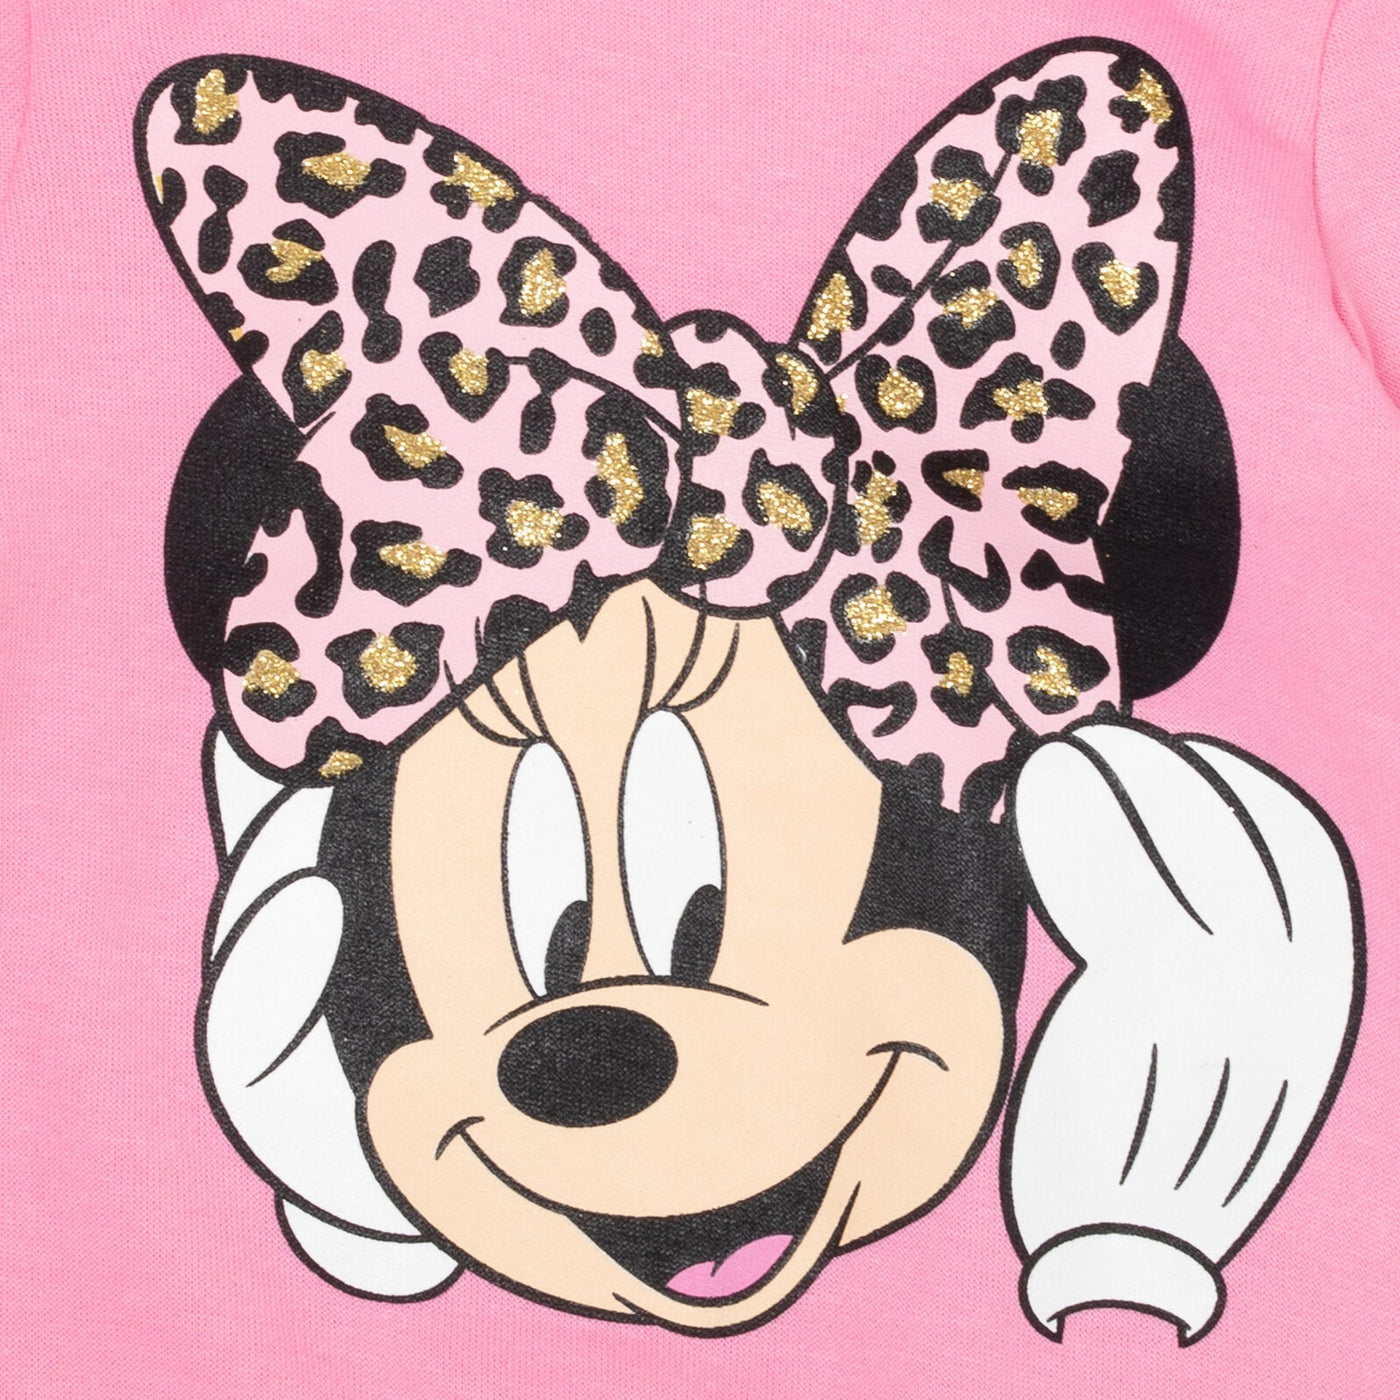 Disney Minnie Mouse Fleece Pullover Hoodie - imagikids